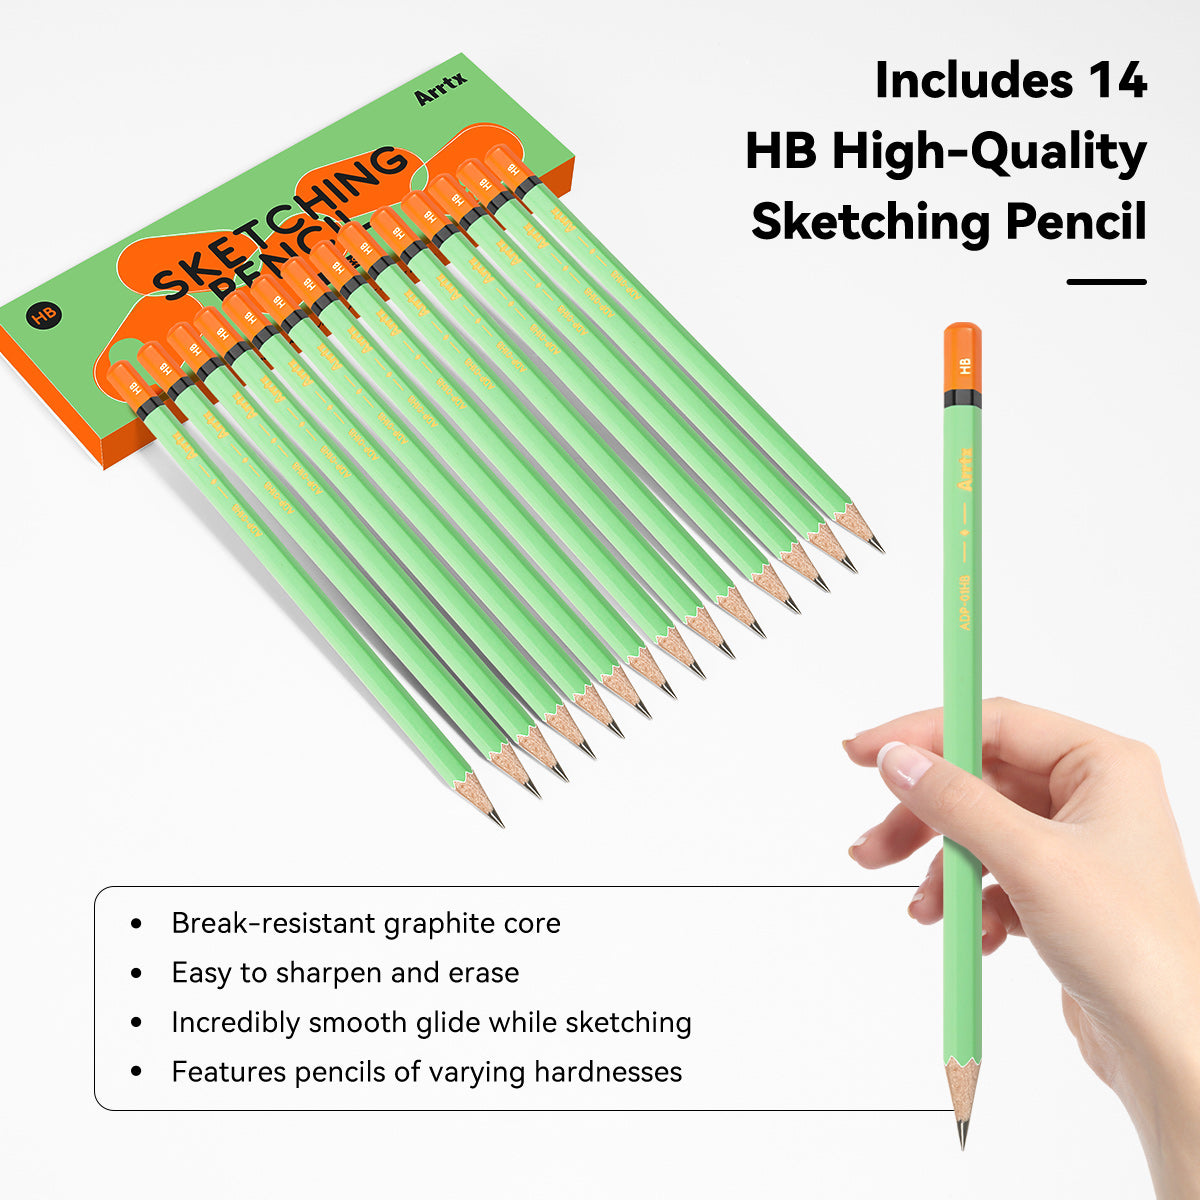 Arrtx Sketch Pencils 14 Pack #2 HB Art Drawing Pencils